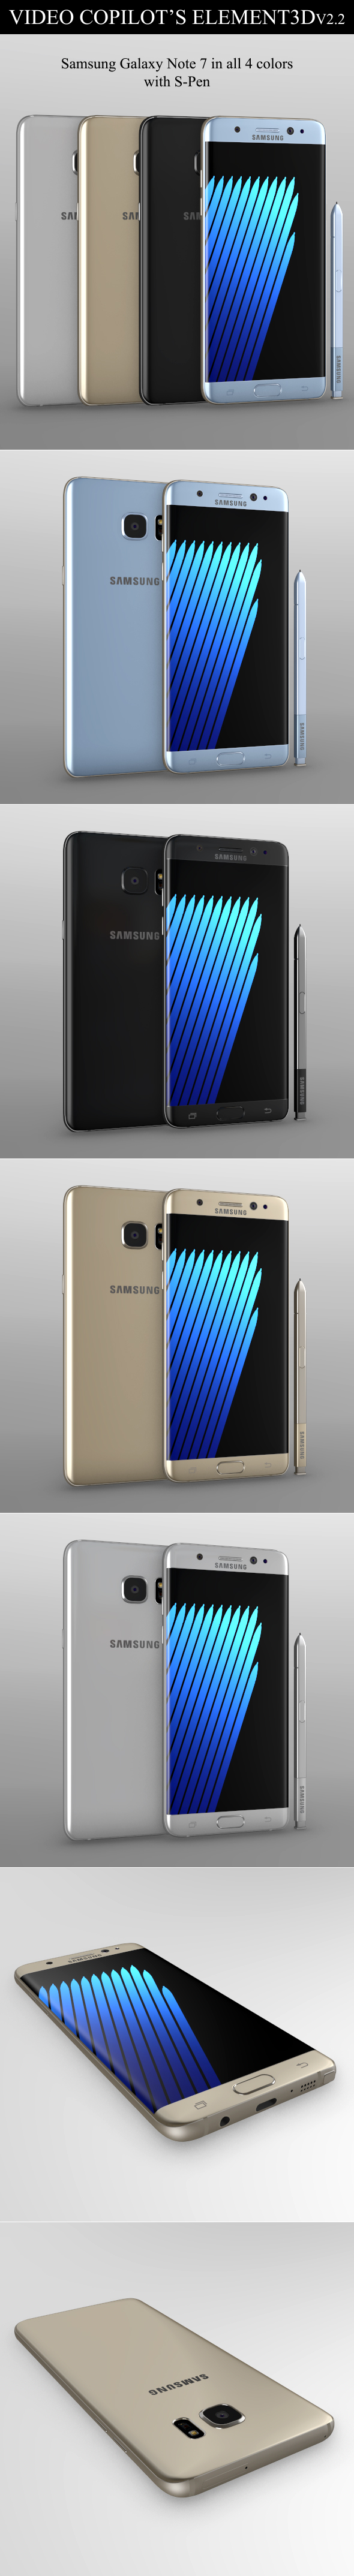 Element3D - Samsung Galaxy Note 7